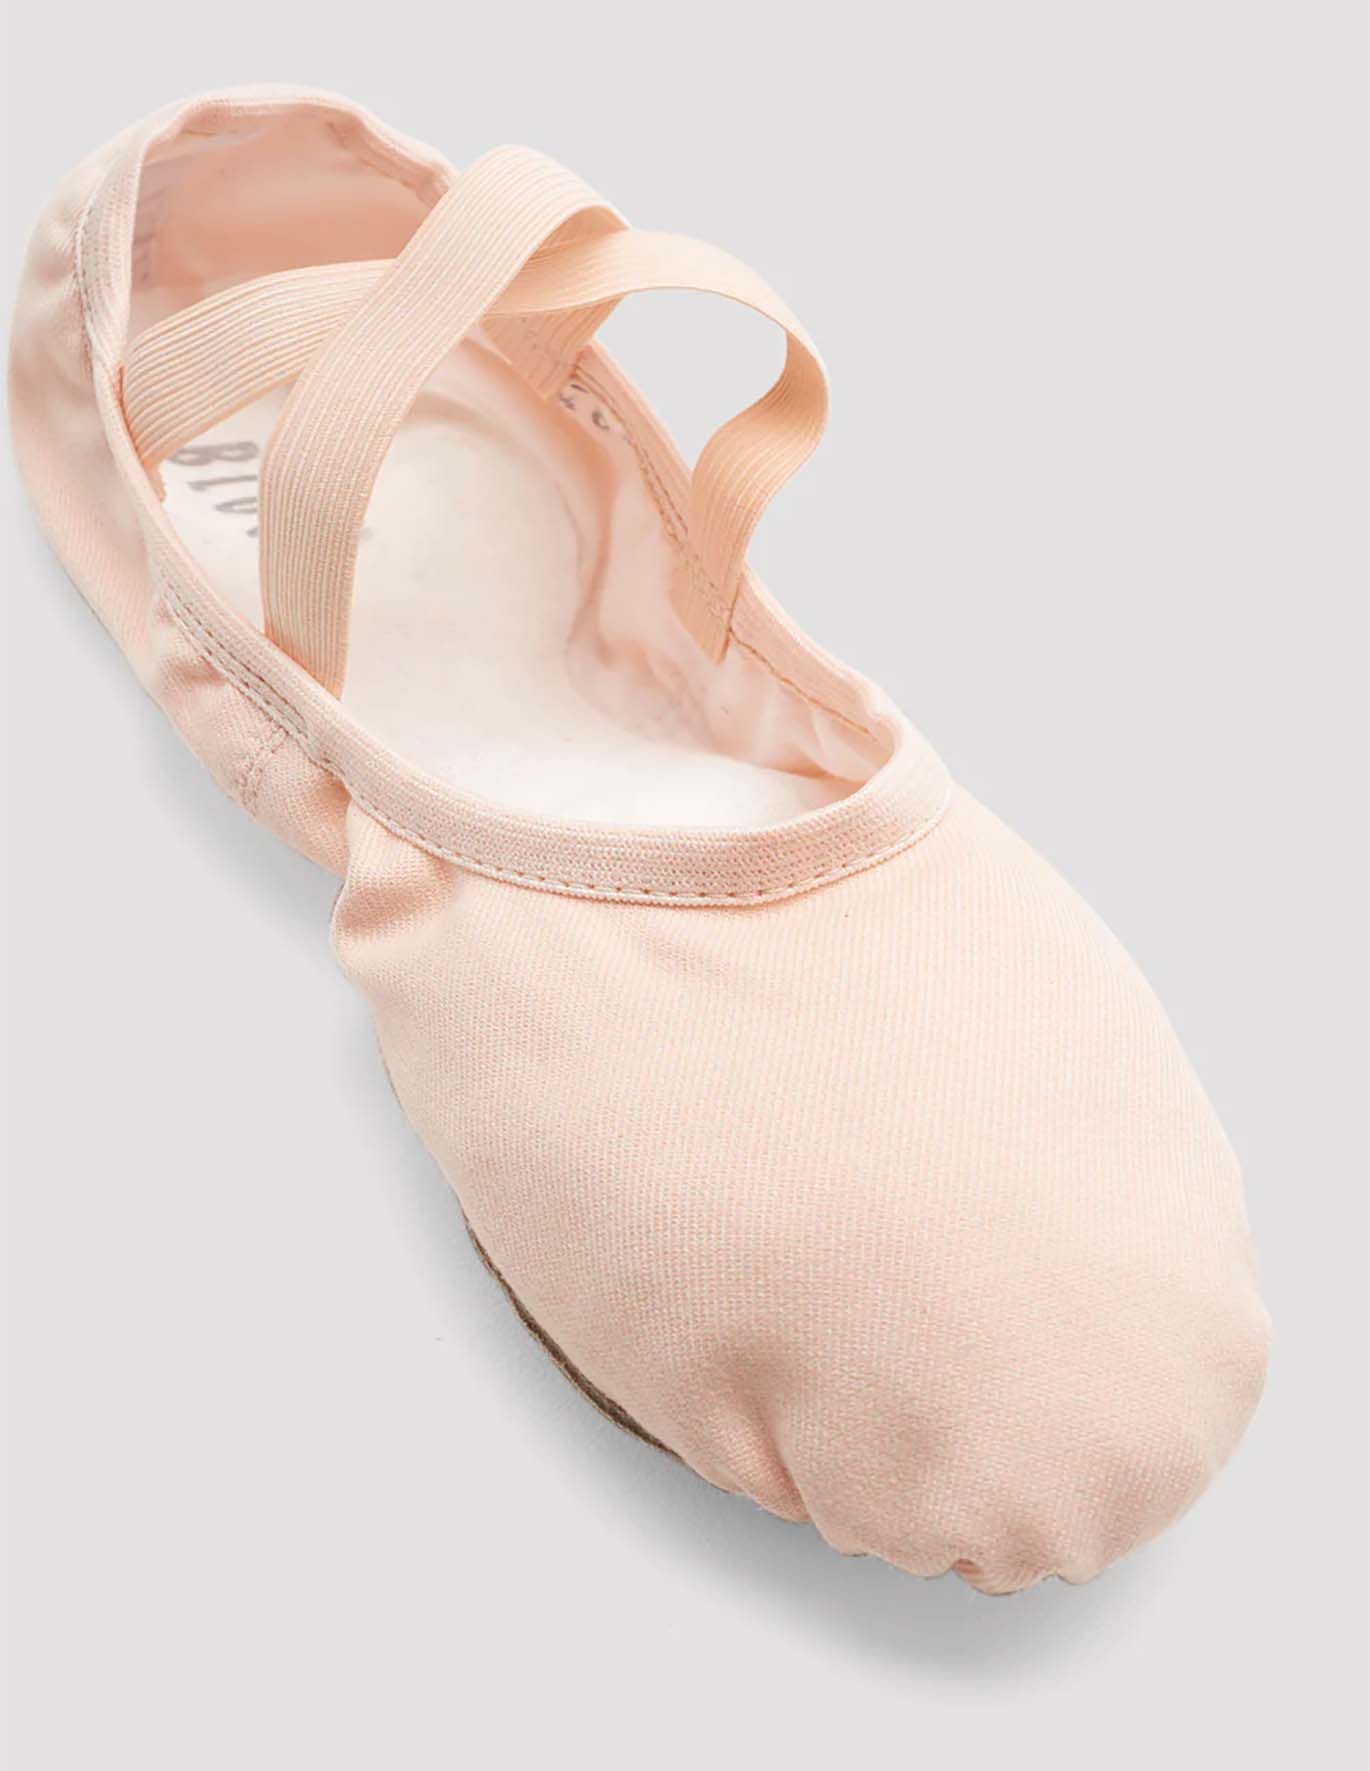 Bloch Performa Split Sole Stretch Canvas Ballet Shoe S0284